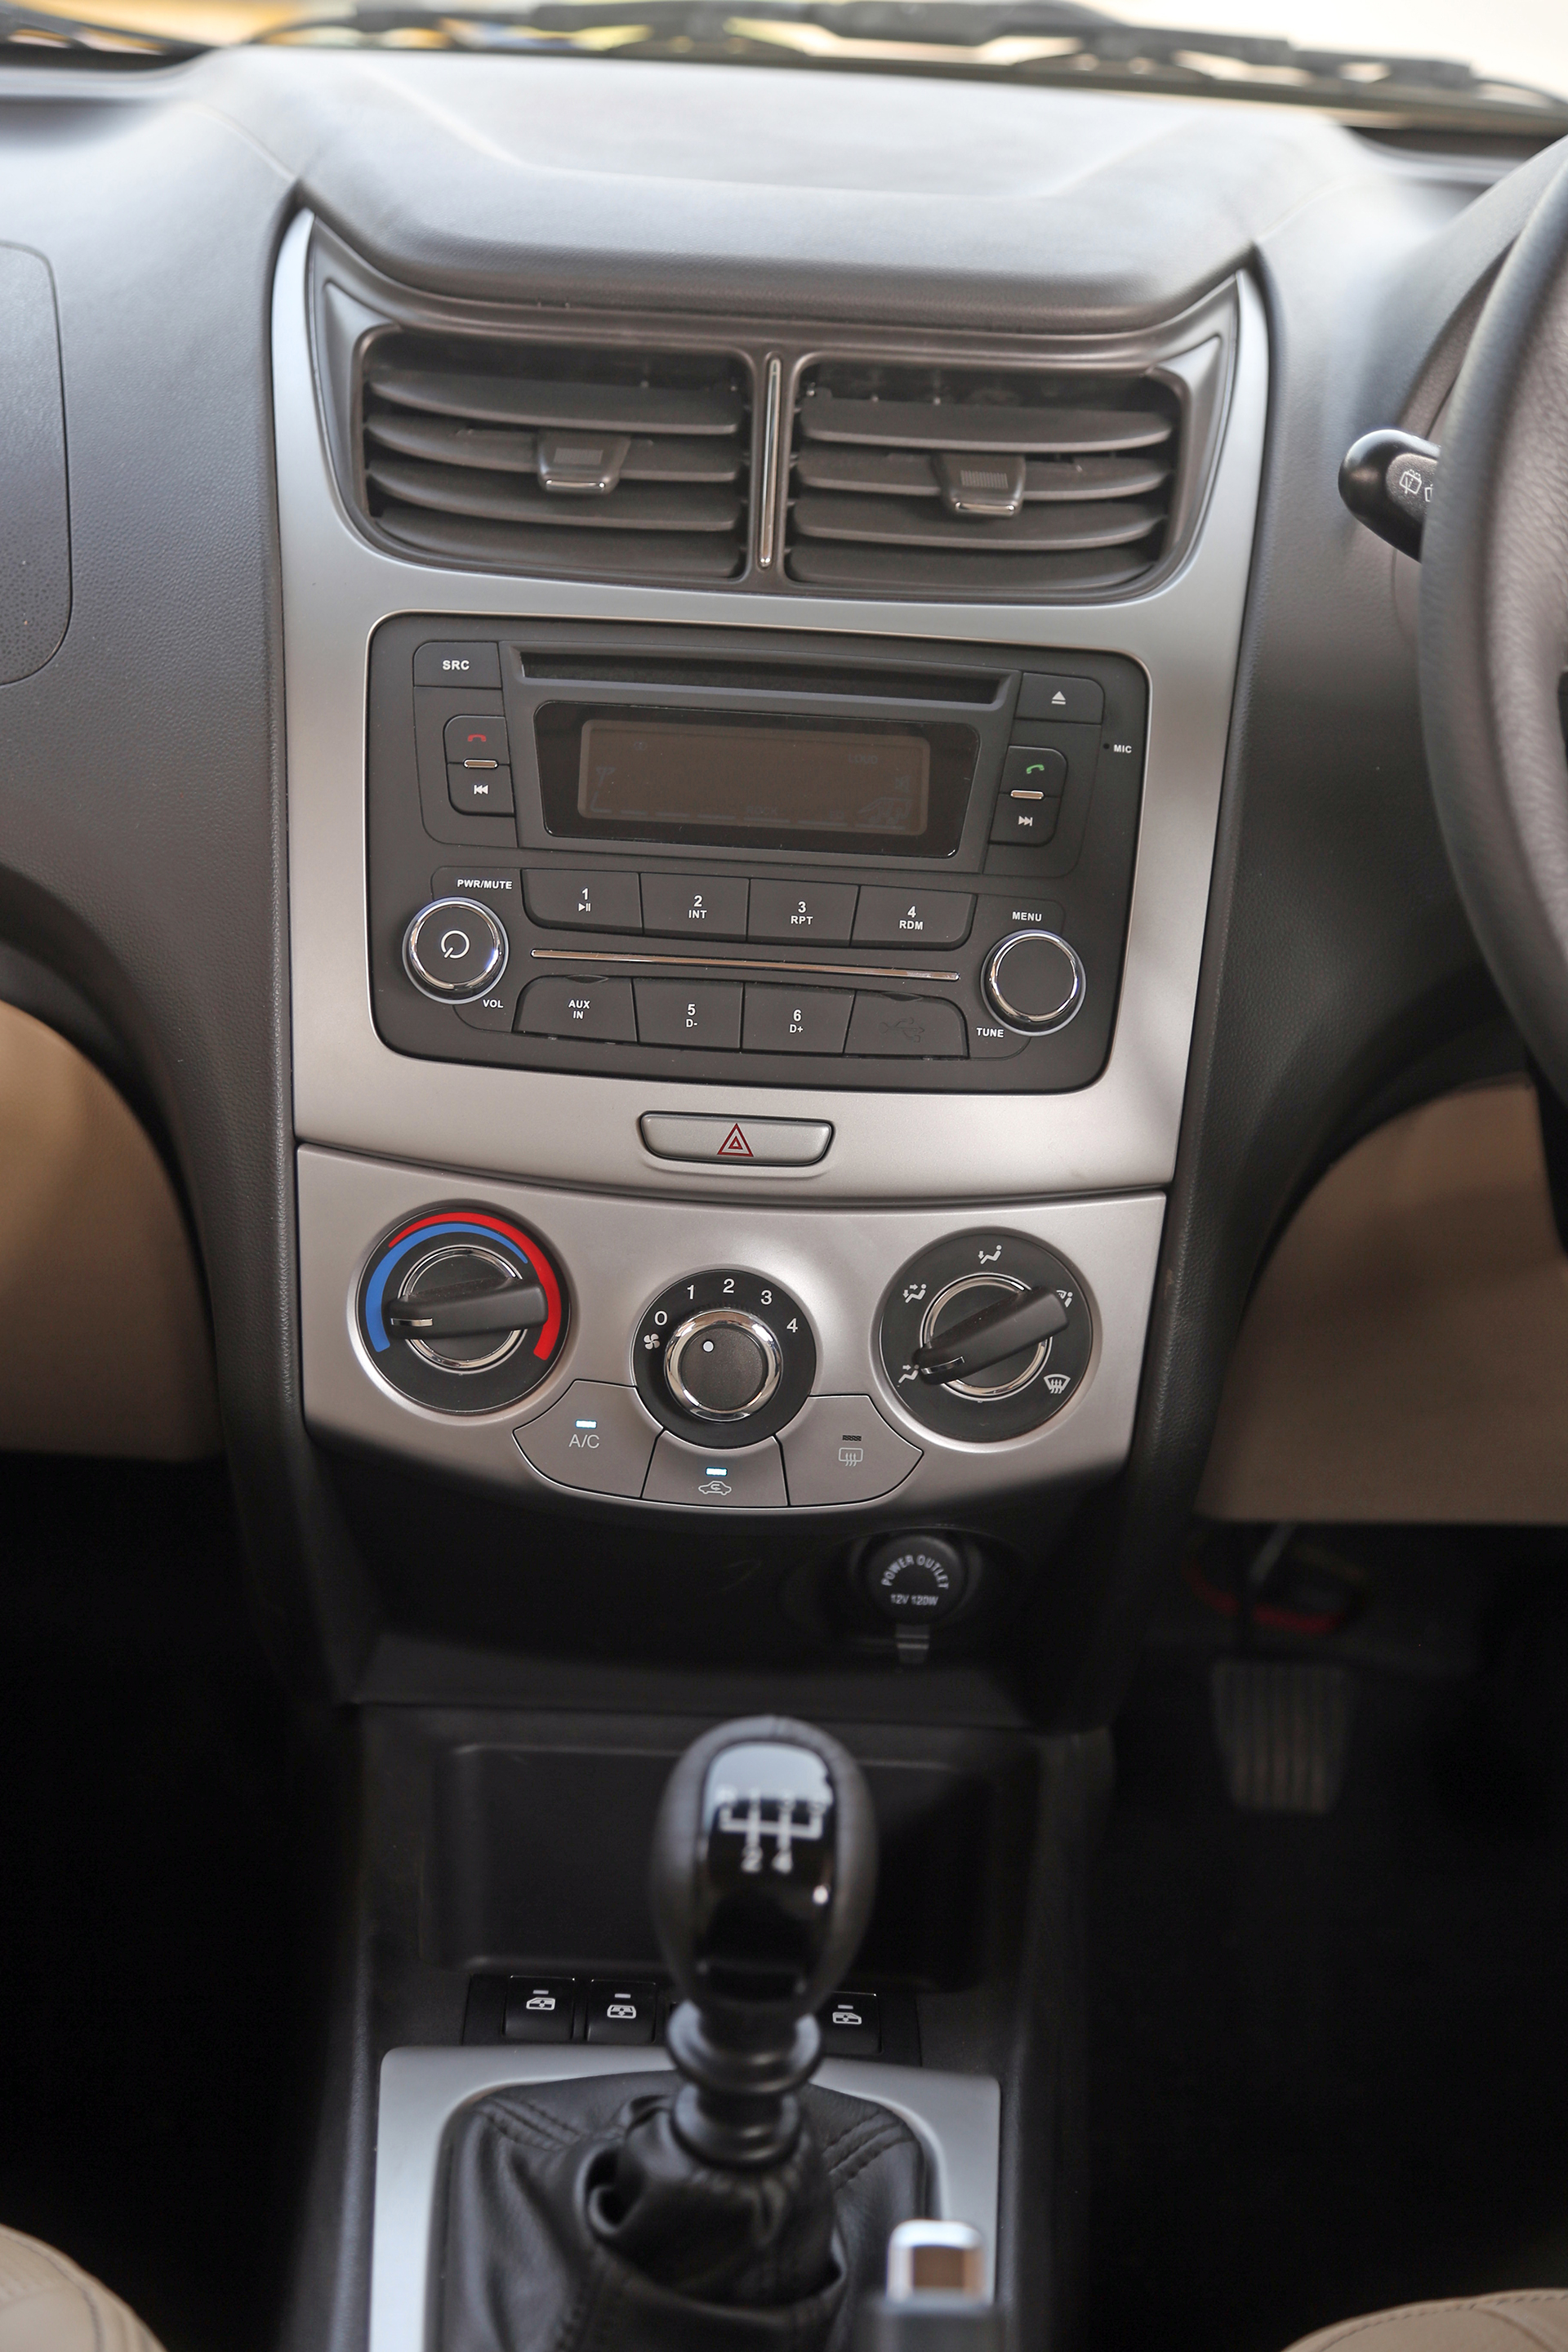 Chevrolet-Sail-2014 Interior